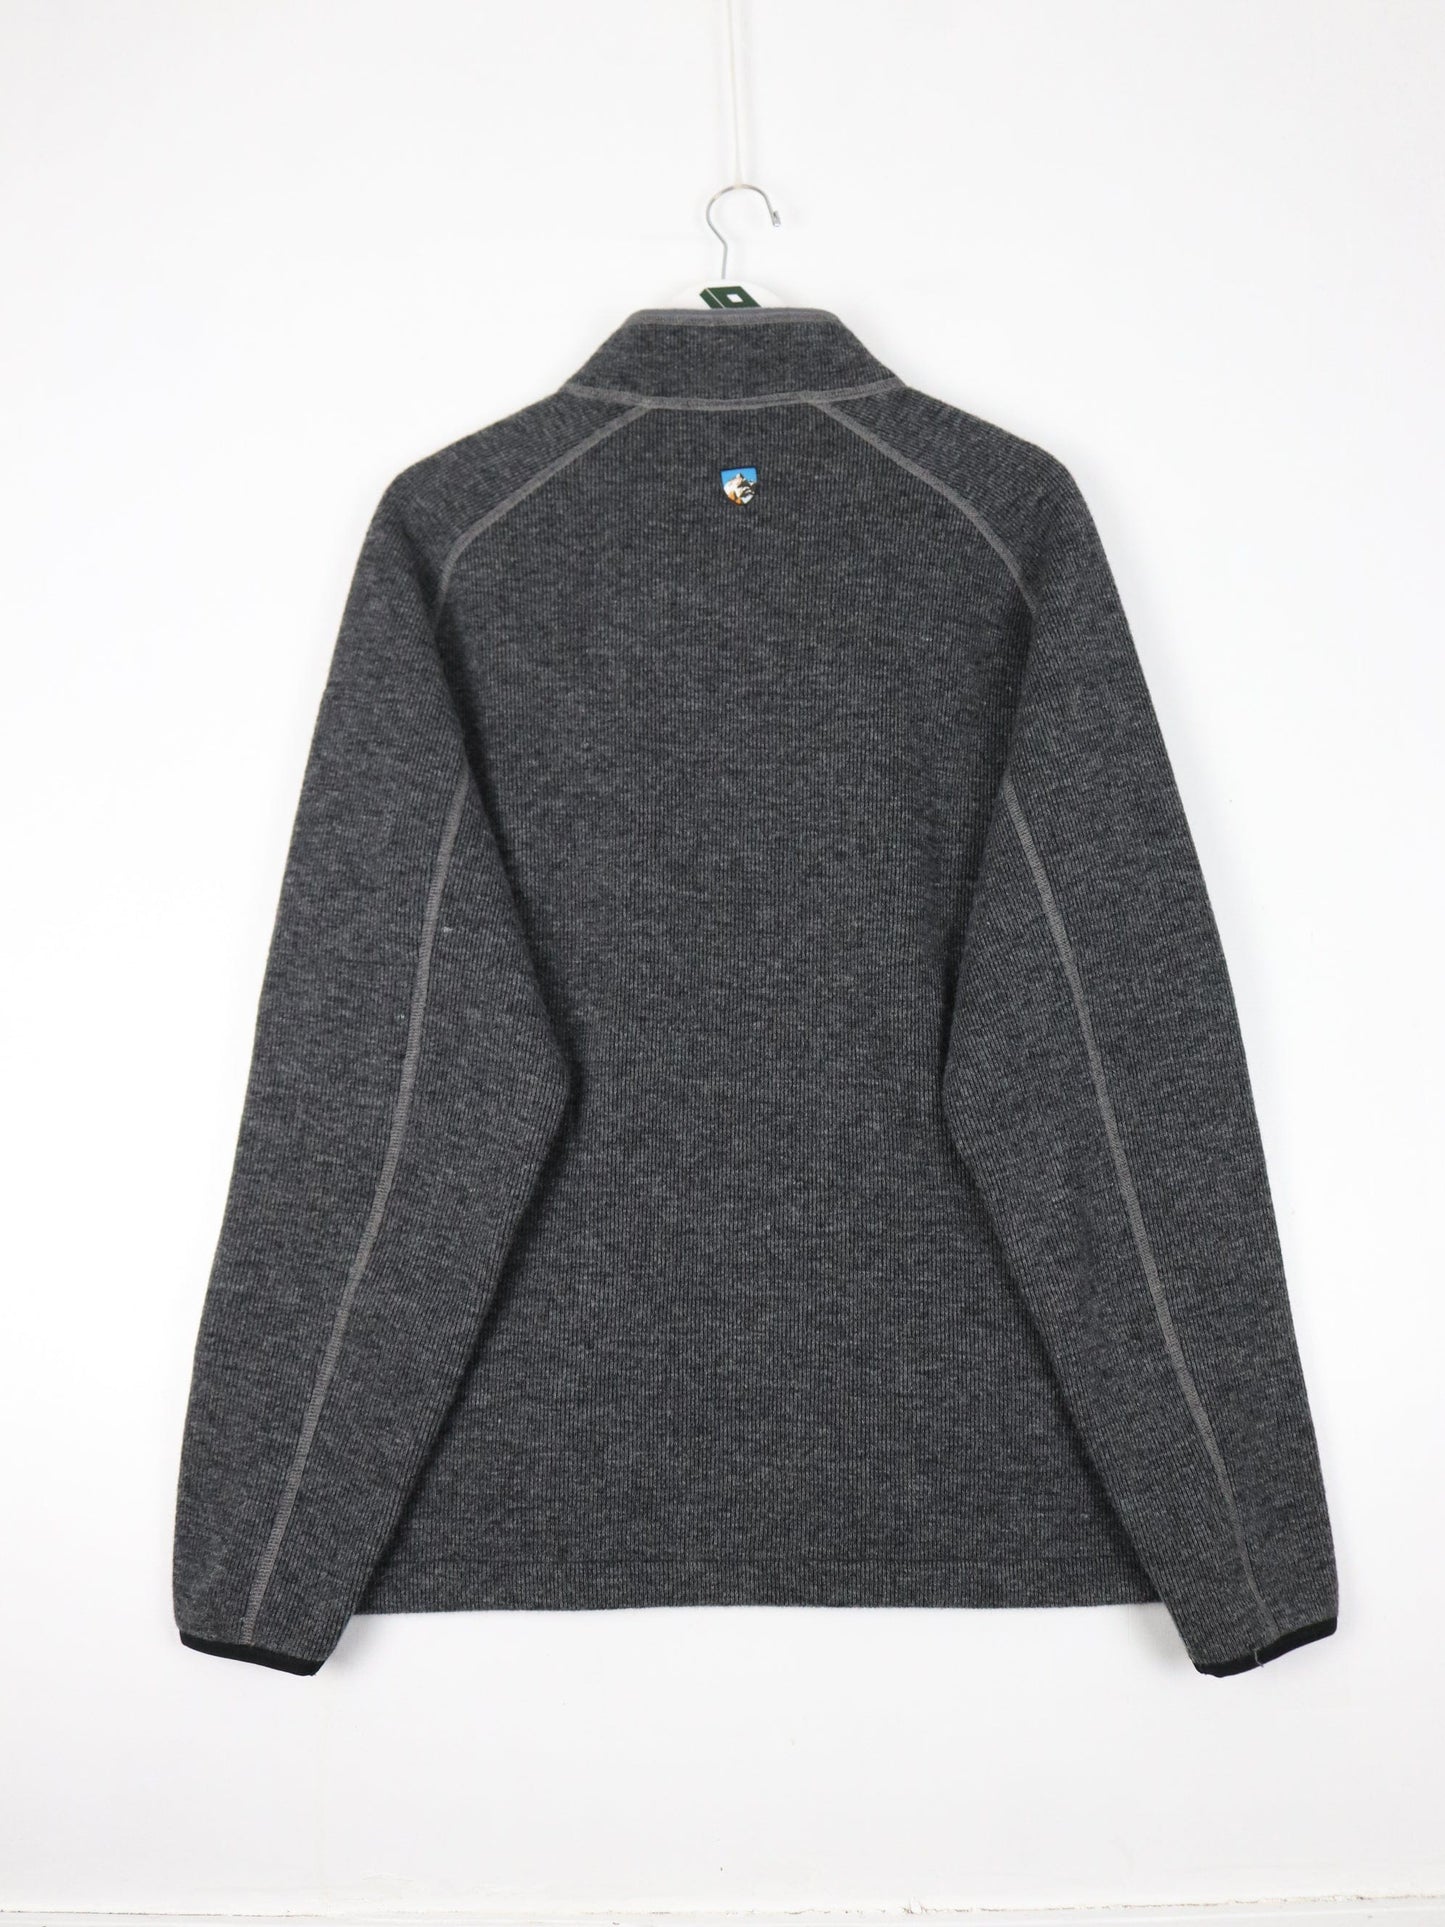 Other Sweatshirts & Hoodies Kuhl Sweater Mens Large Grey Fleece Wool Blend Full Zip Outdoors